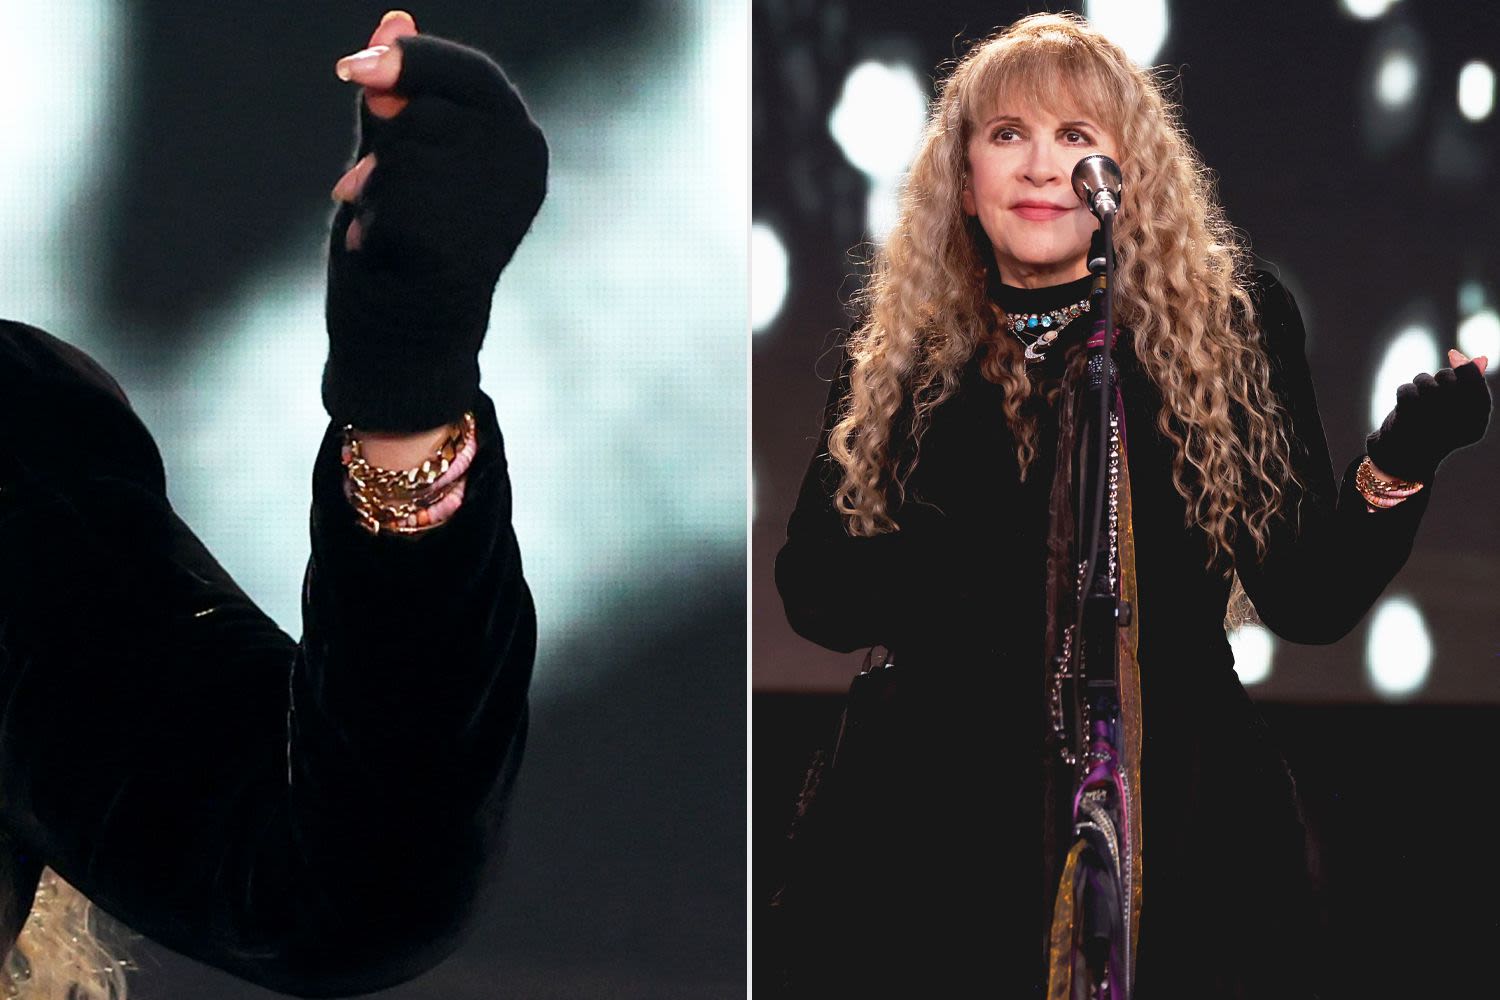 Stevie Nicks Wears “Tortured Poets Department ”Bracelet, Proving She’s the Ultimate Taylor Swift Fangirl